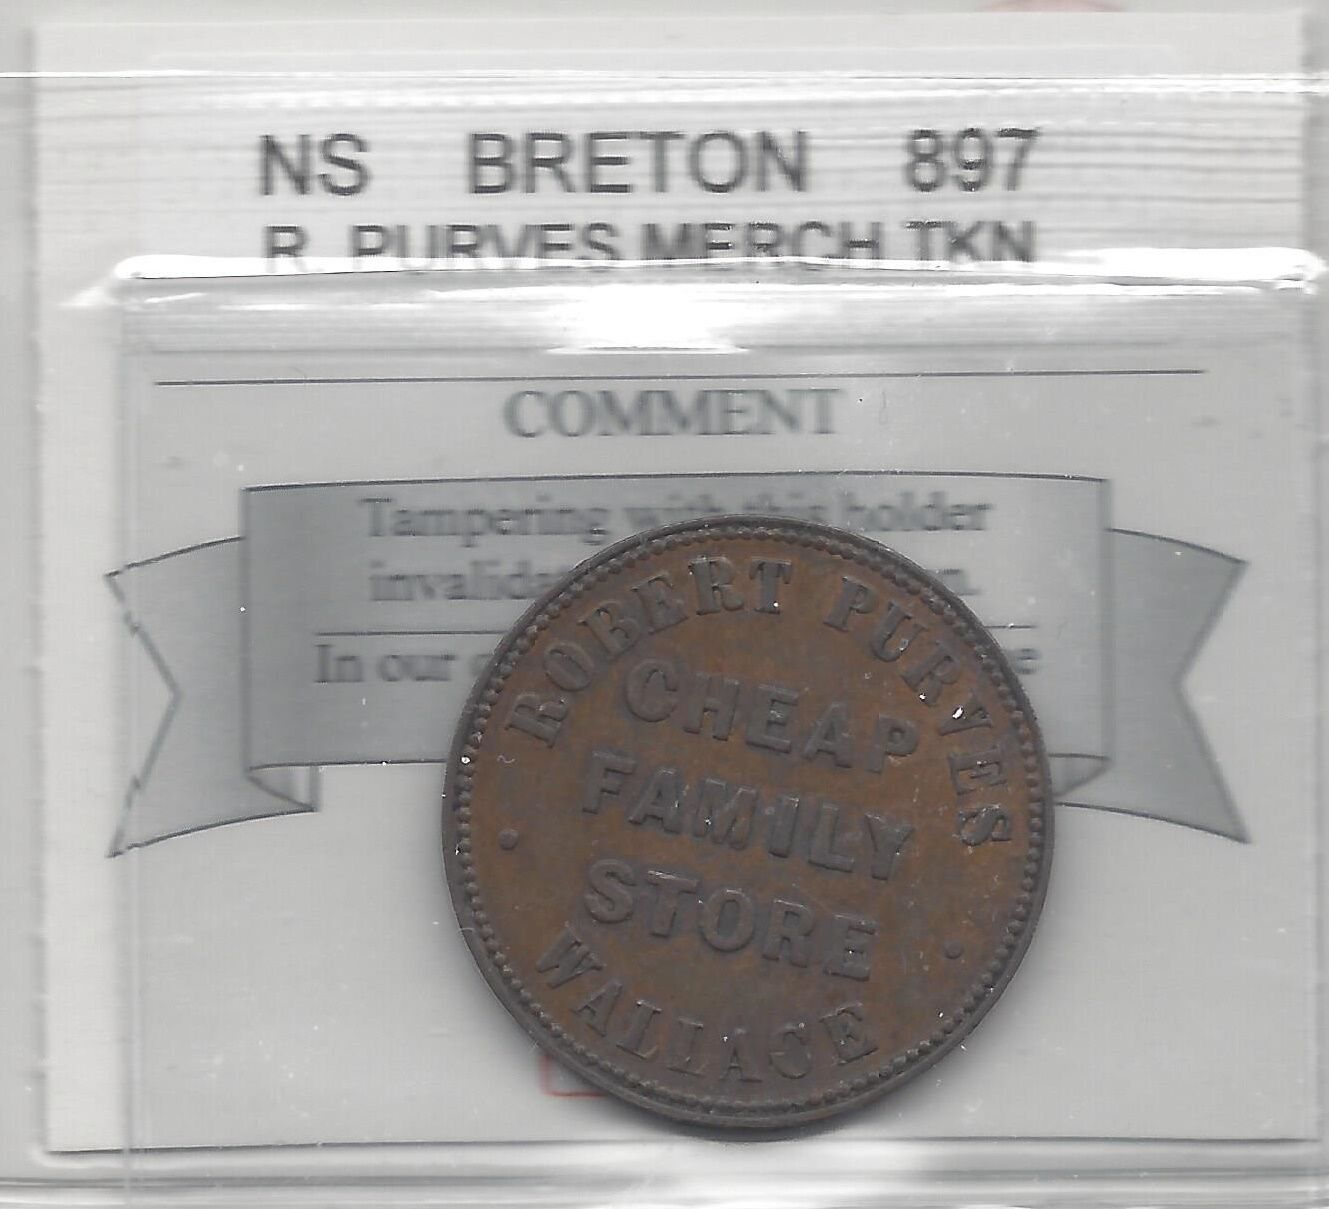 Nova Scotia Breton 897 R. Purves Merchant Token**